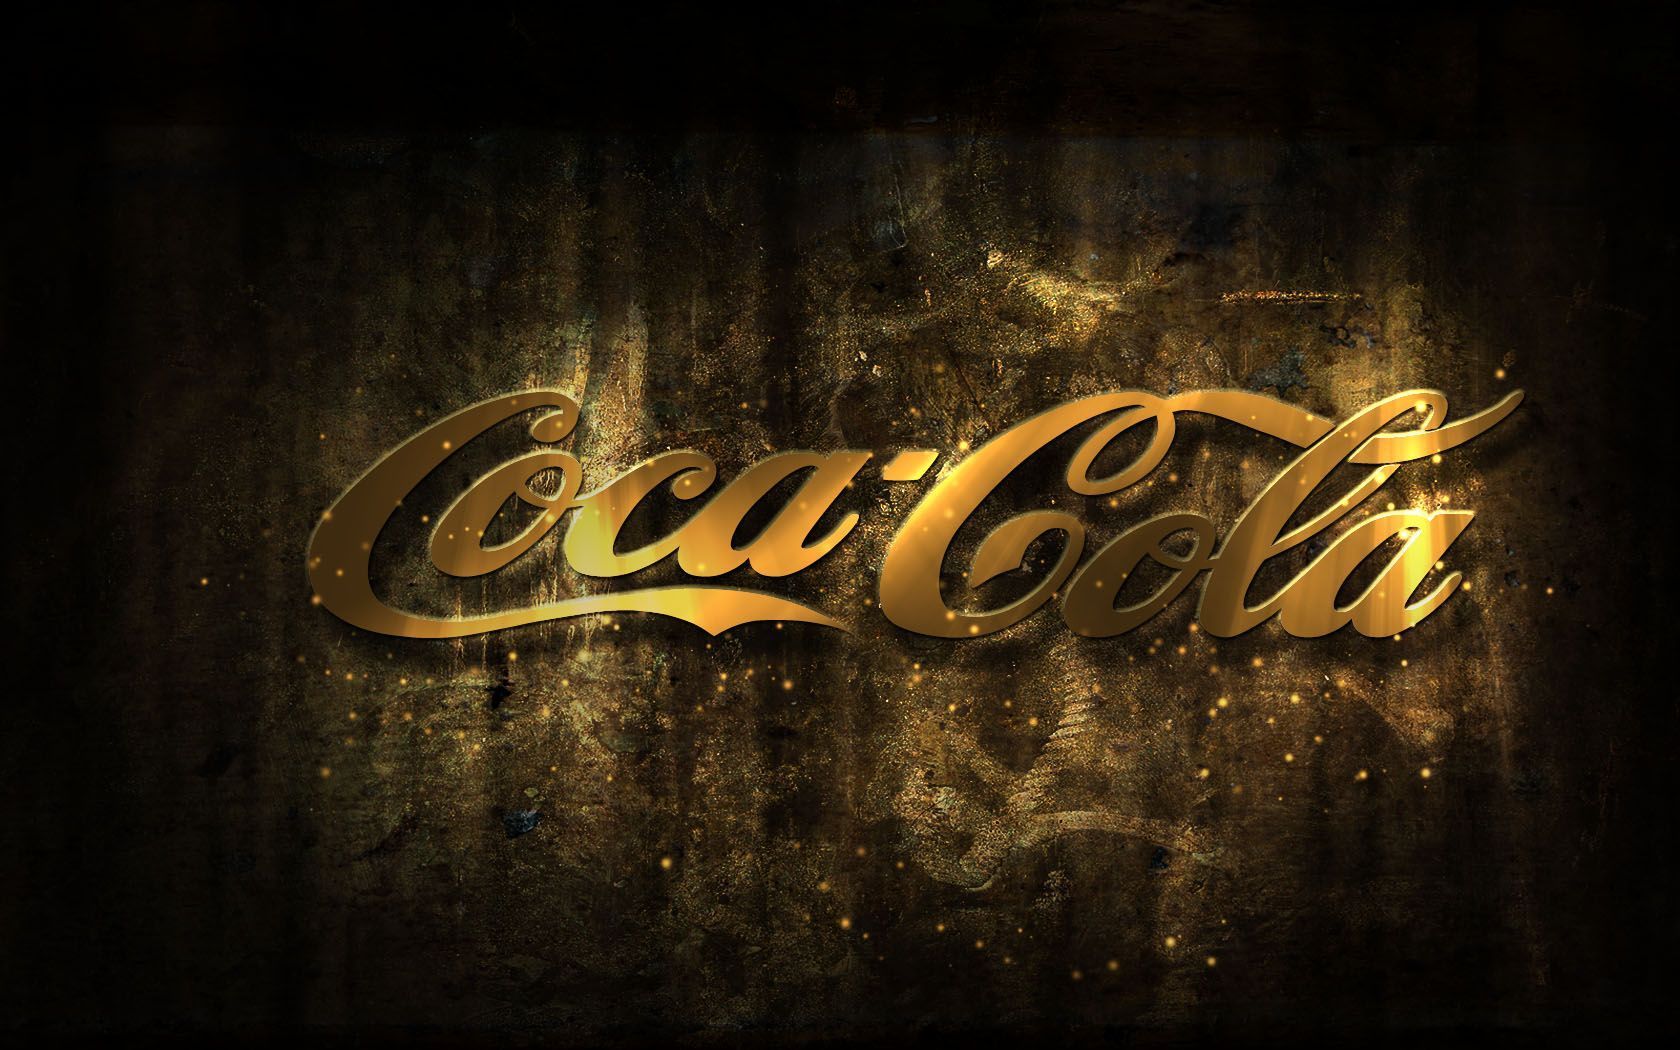 Coca Cola Logos Wallpaper Full HD Pictures